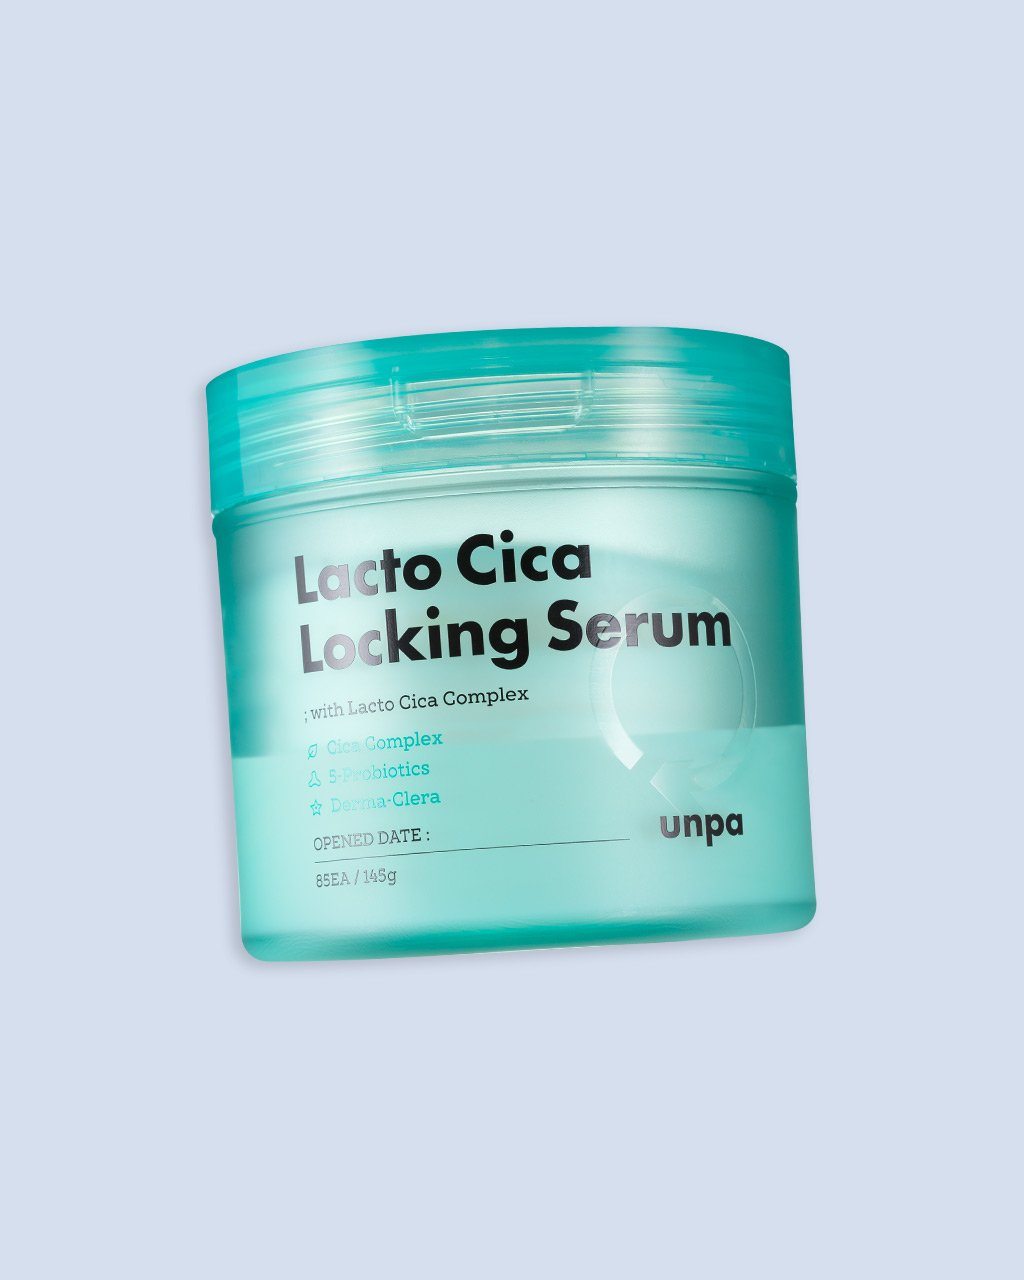 Lacto Cica Locking Serum - product picture